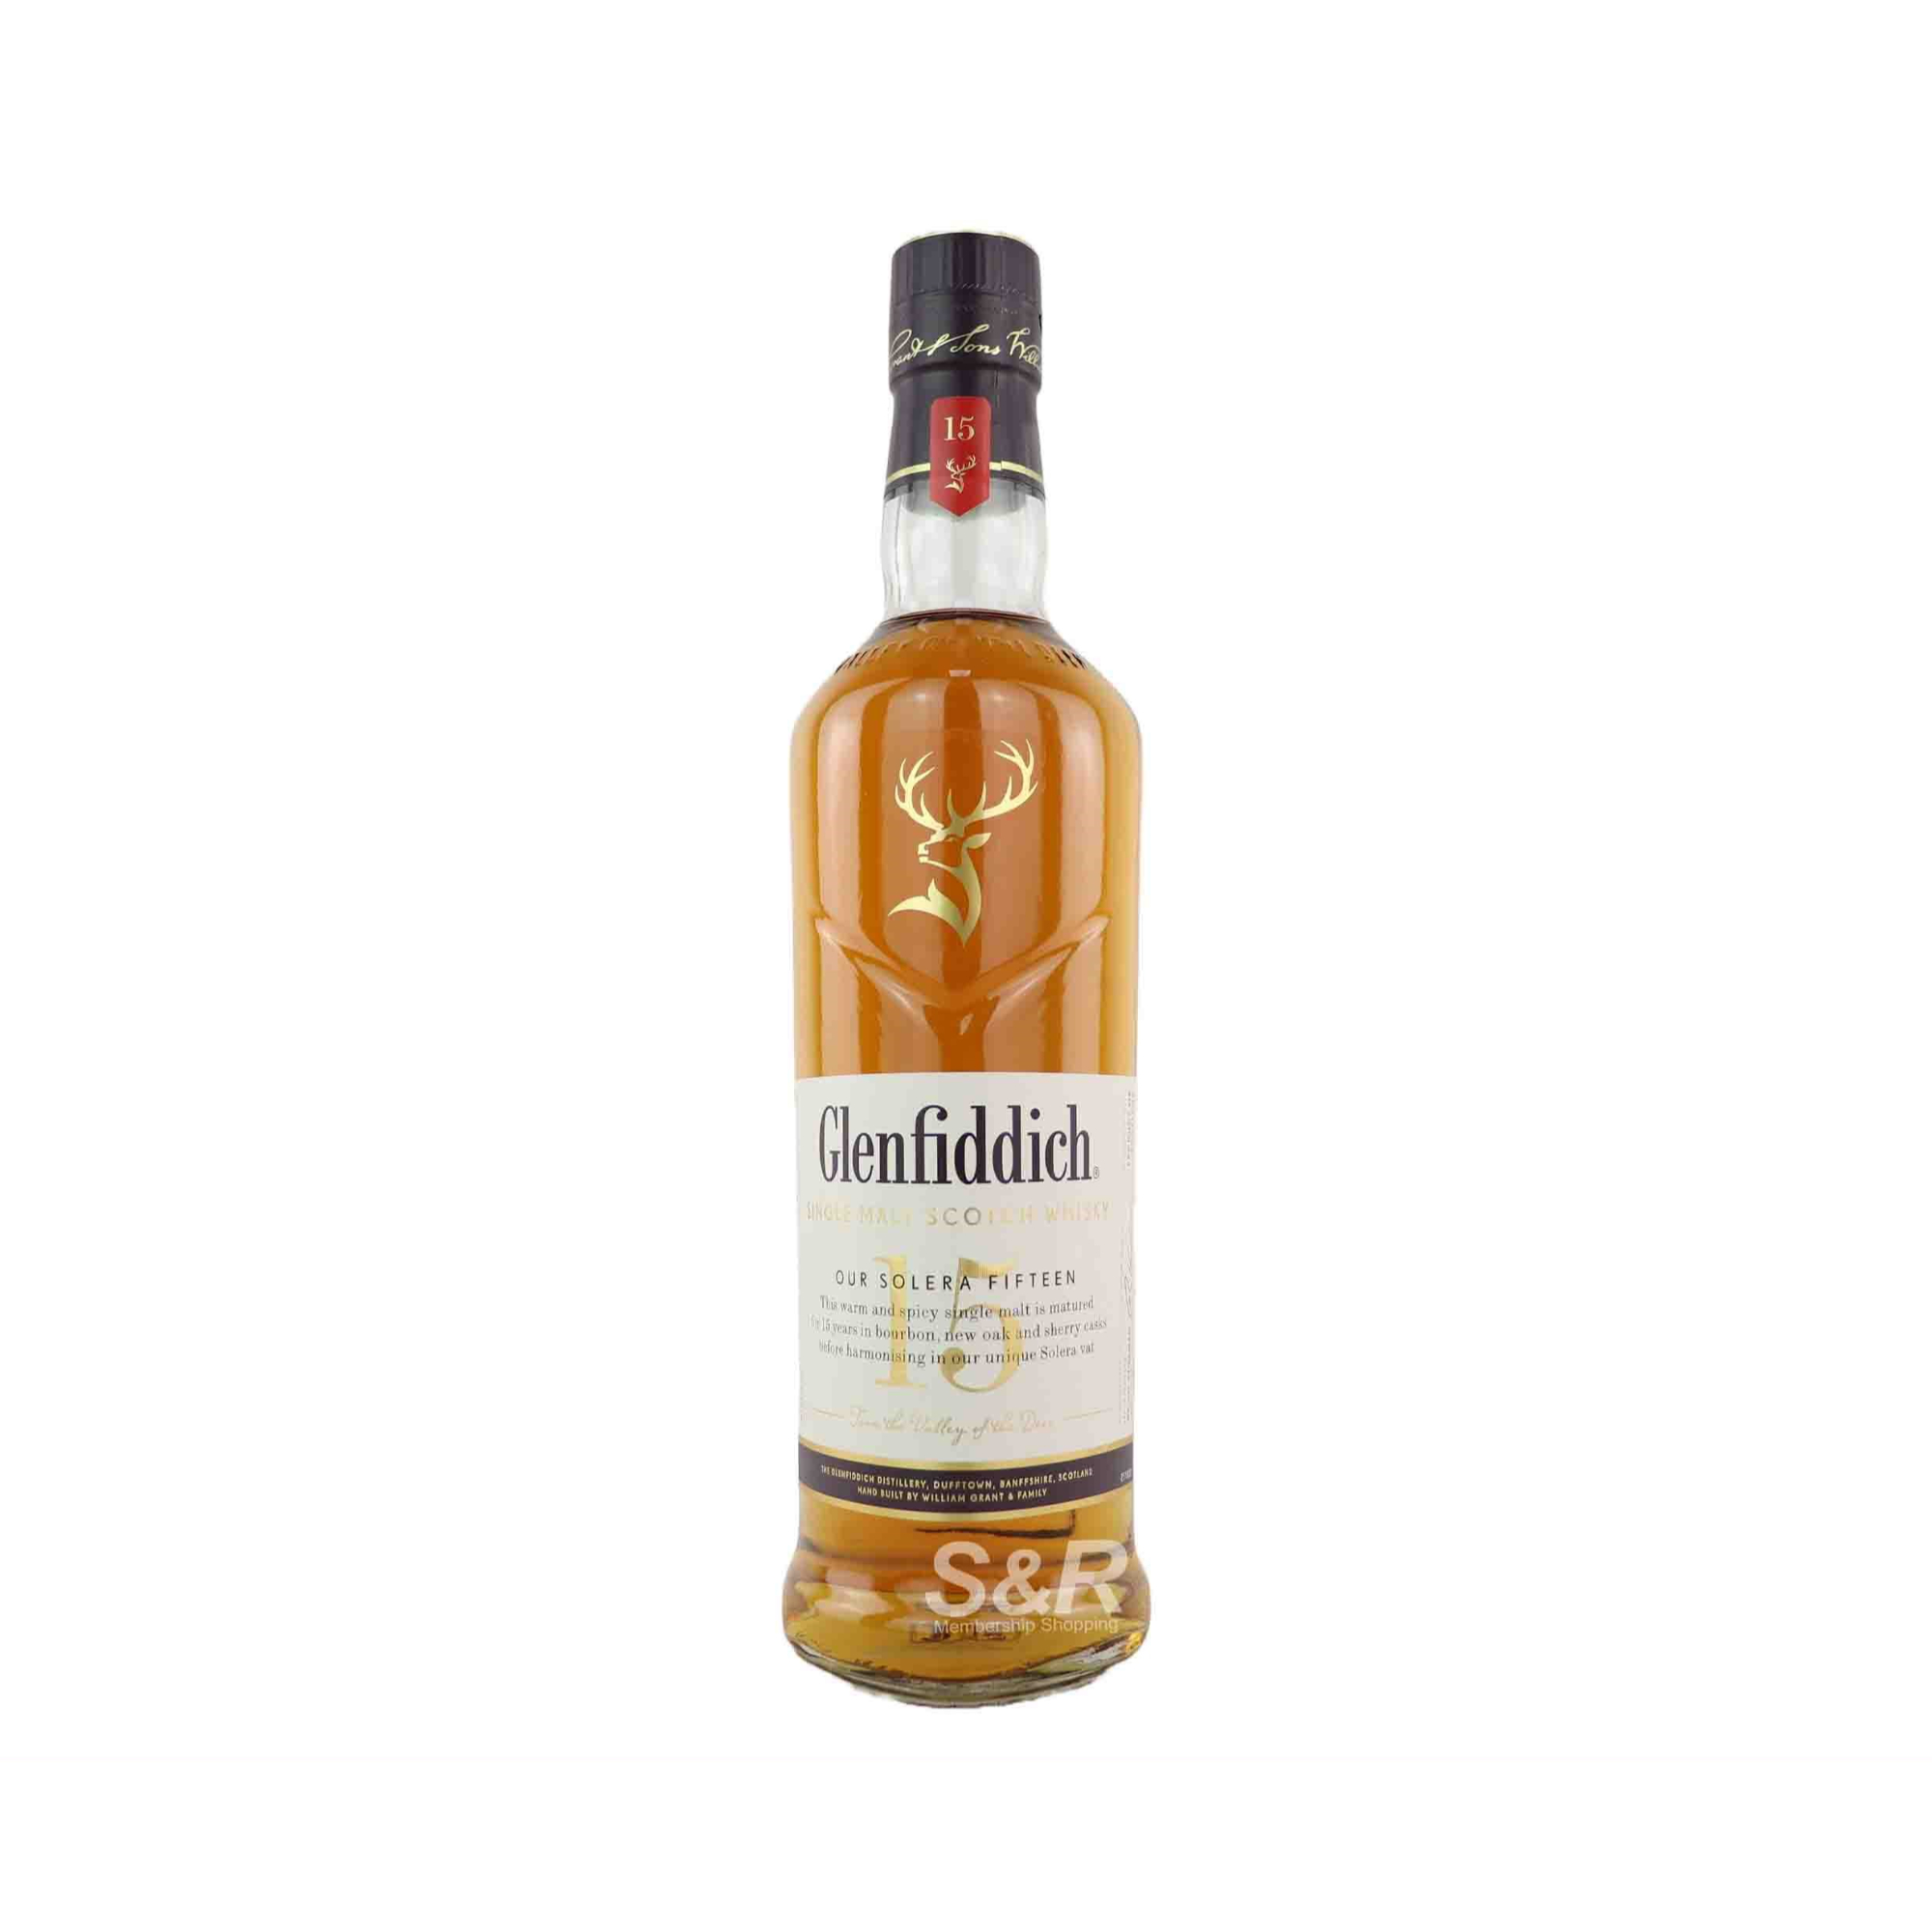 Glenfiddich Aged 15 Years Single Malt Scotch Whisky 750mL